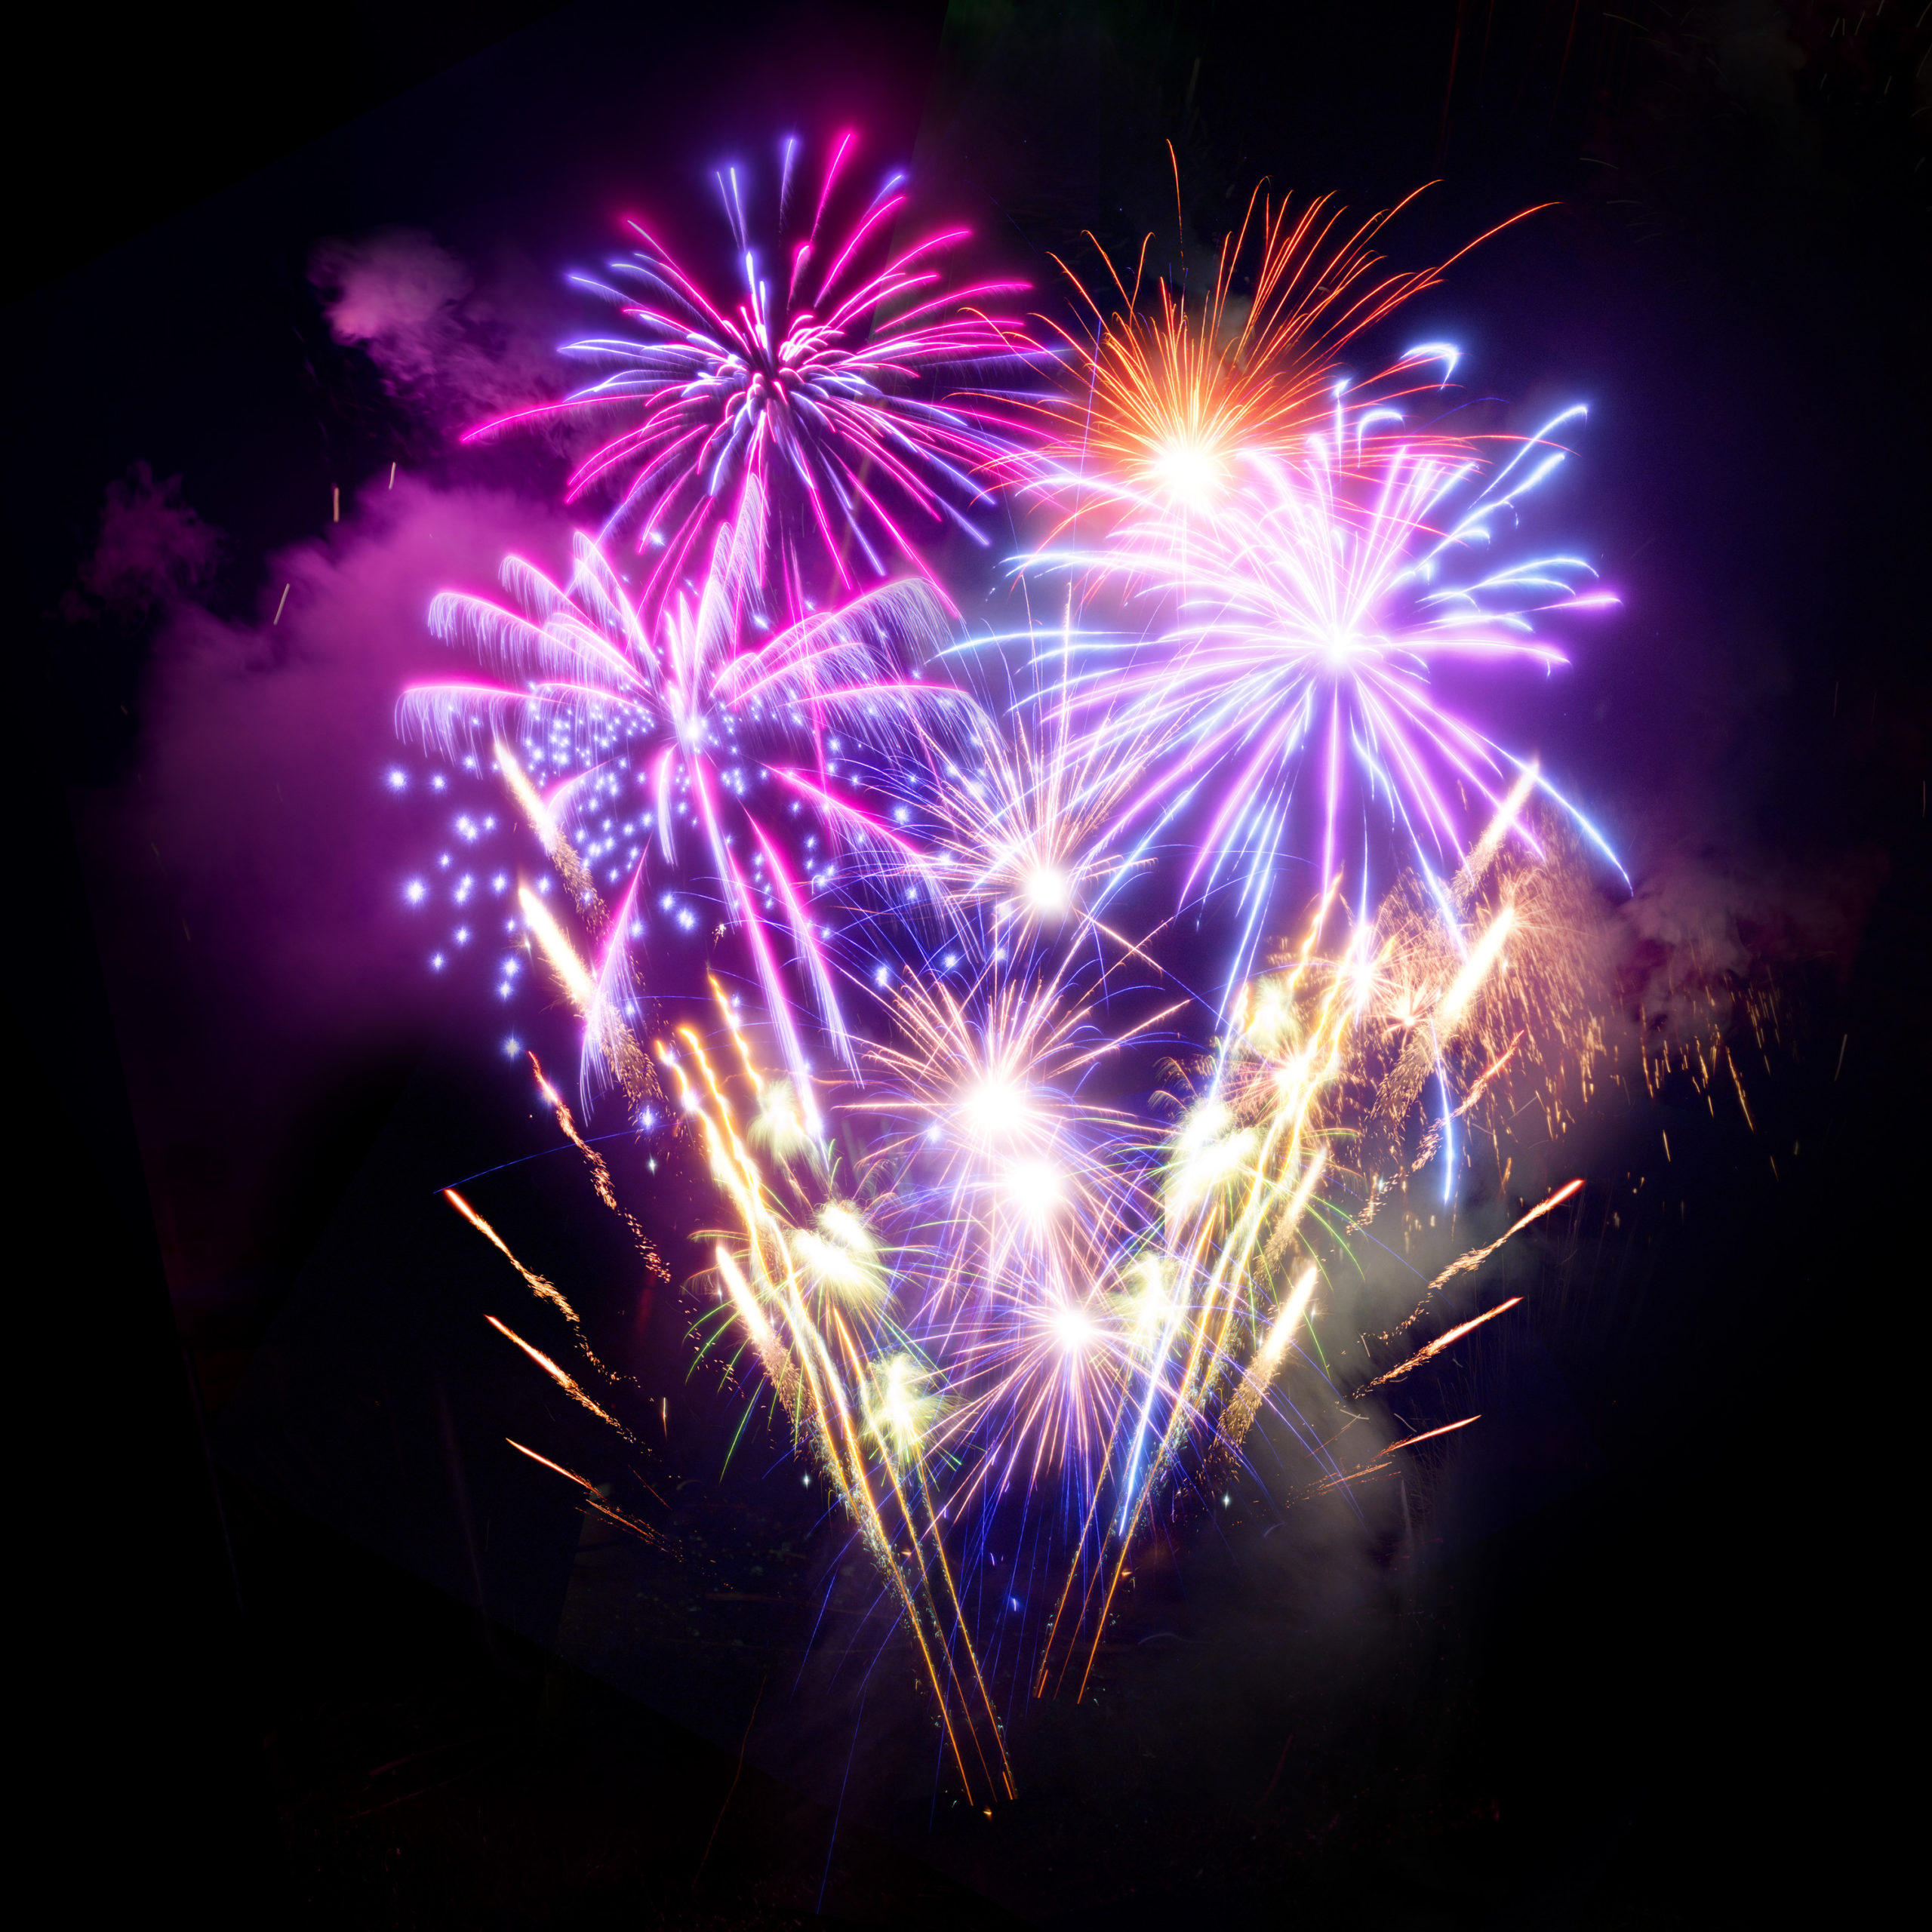 bruce power hosting community appreciation fireworks display scaled